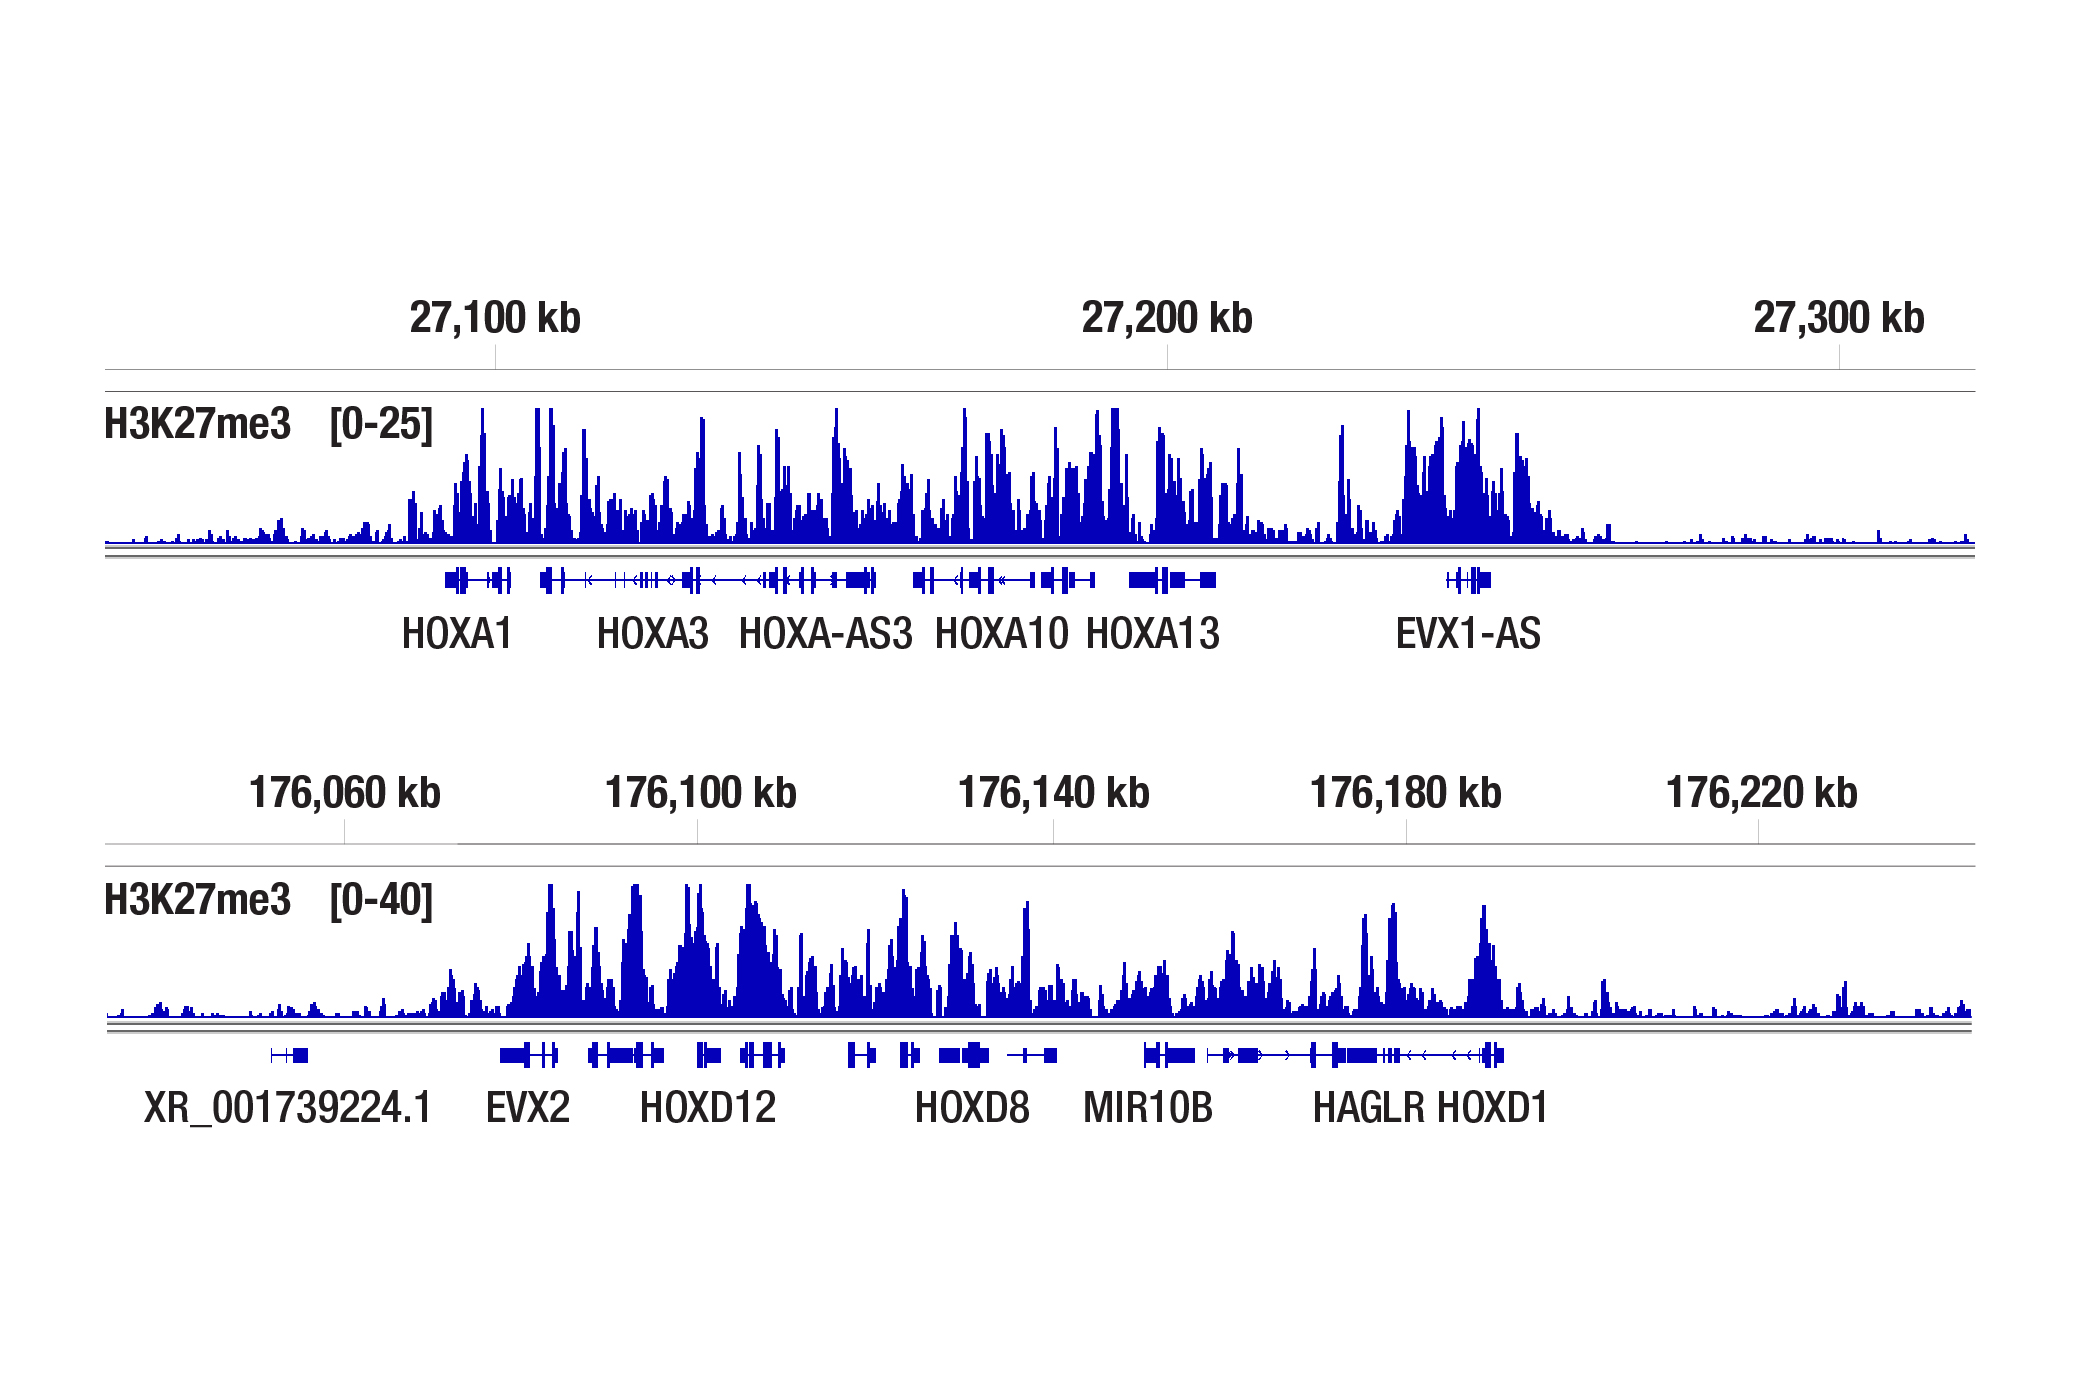 Does the CUT&Tag assay show a bias toward euchromatin or heterochromatin? (H3K27me3)